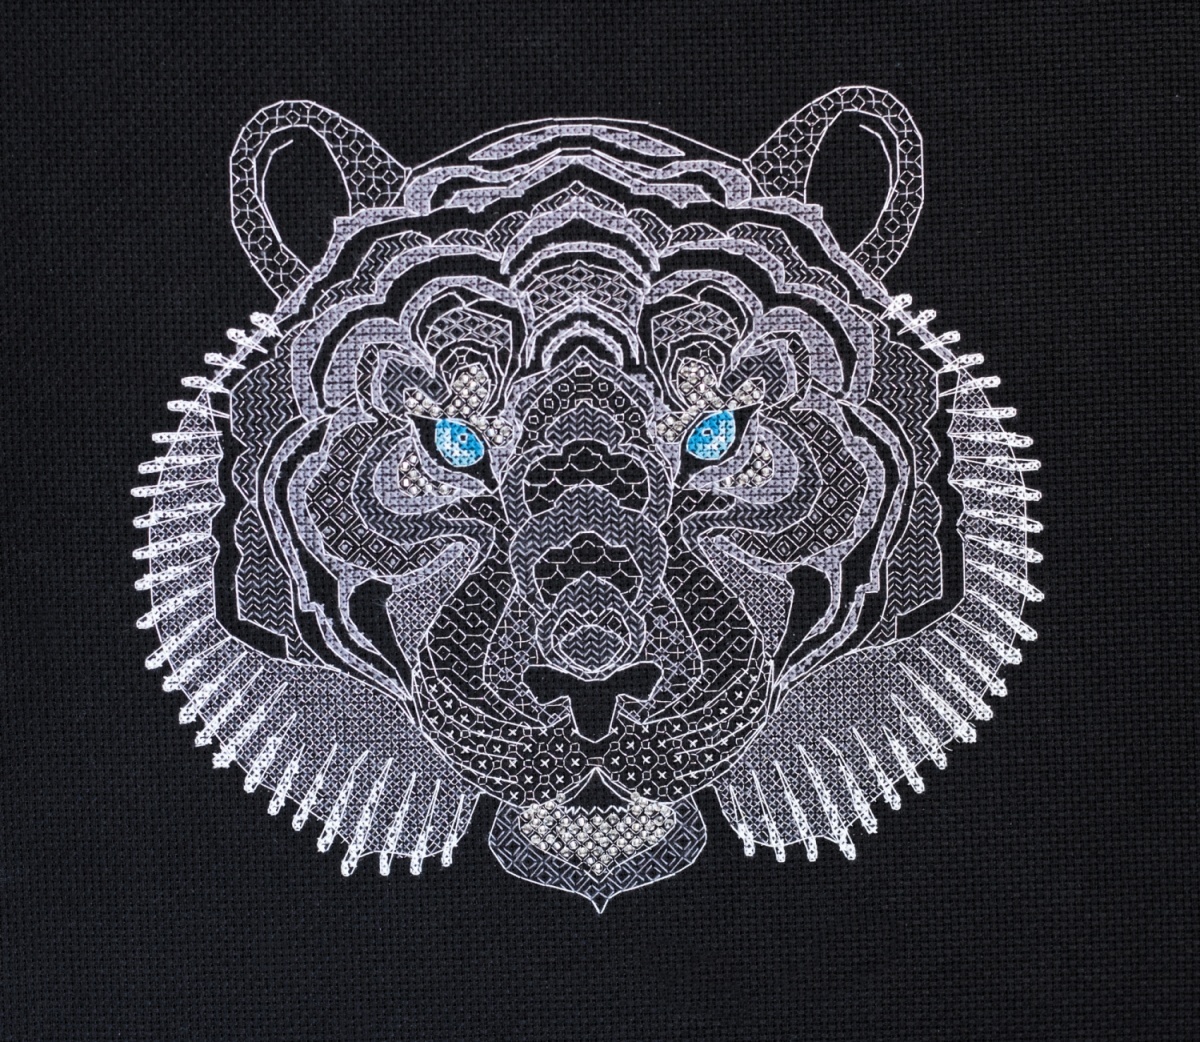 White Tiger Cross Stitch Kit фото 1